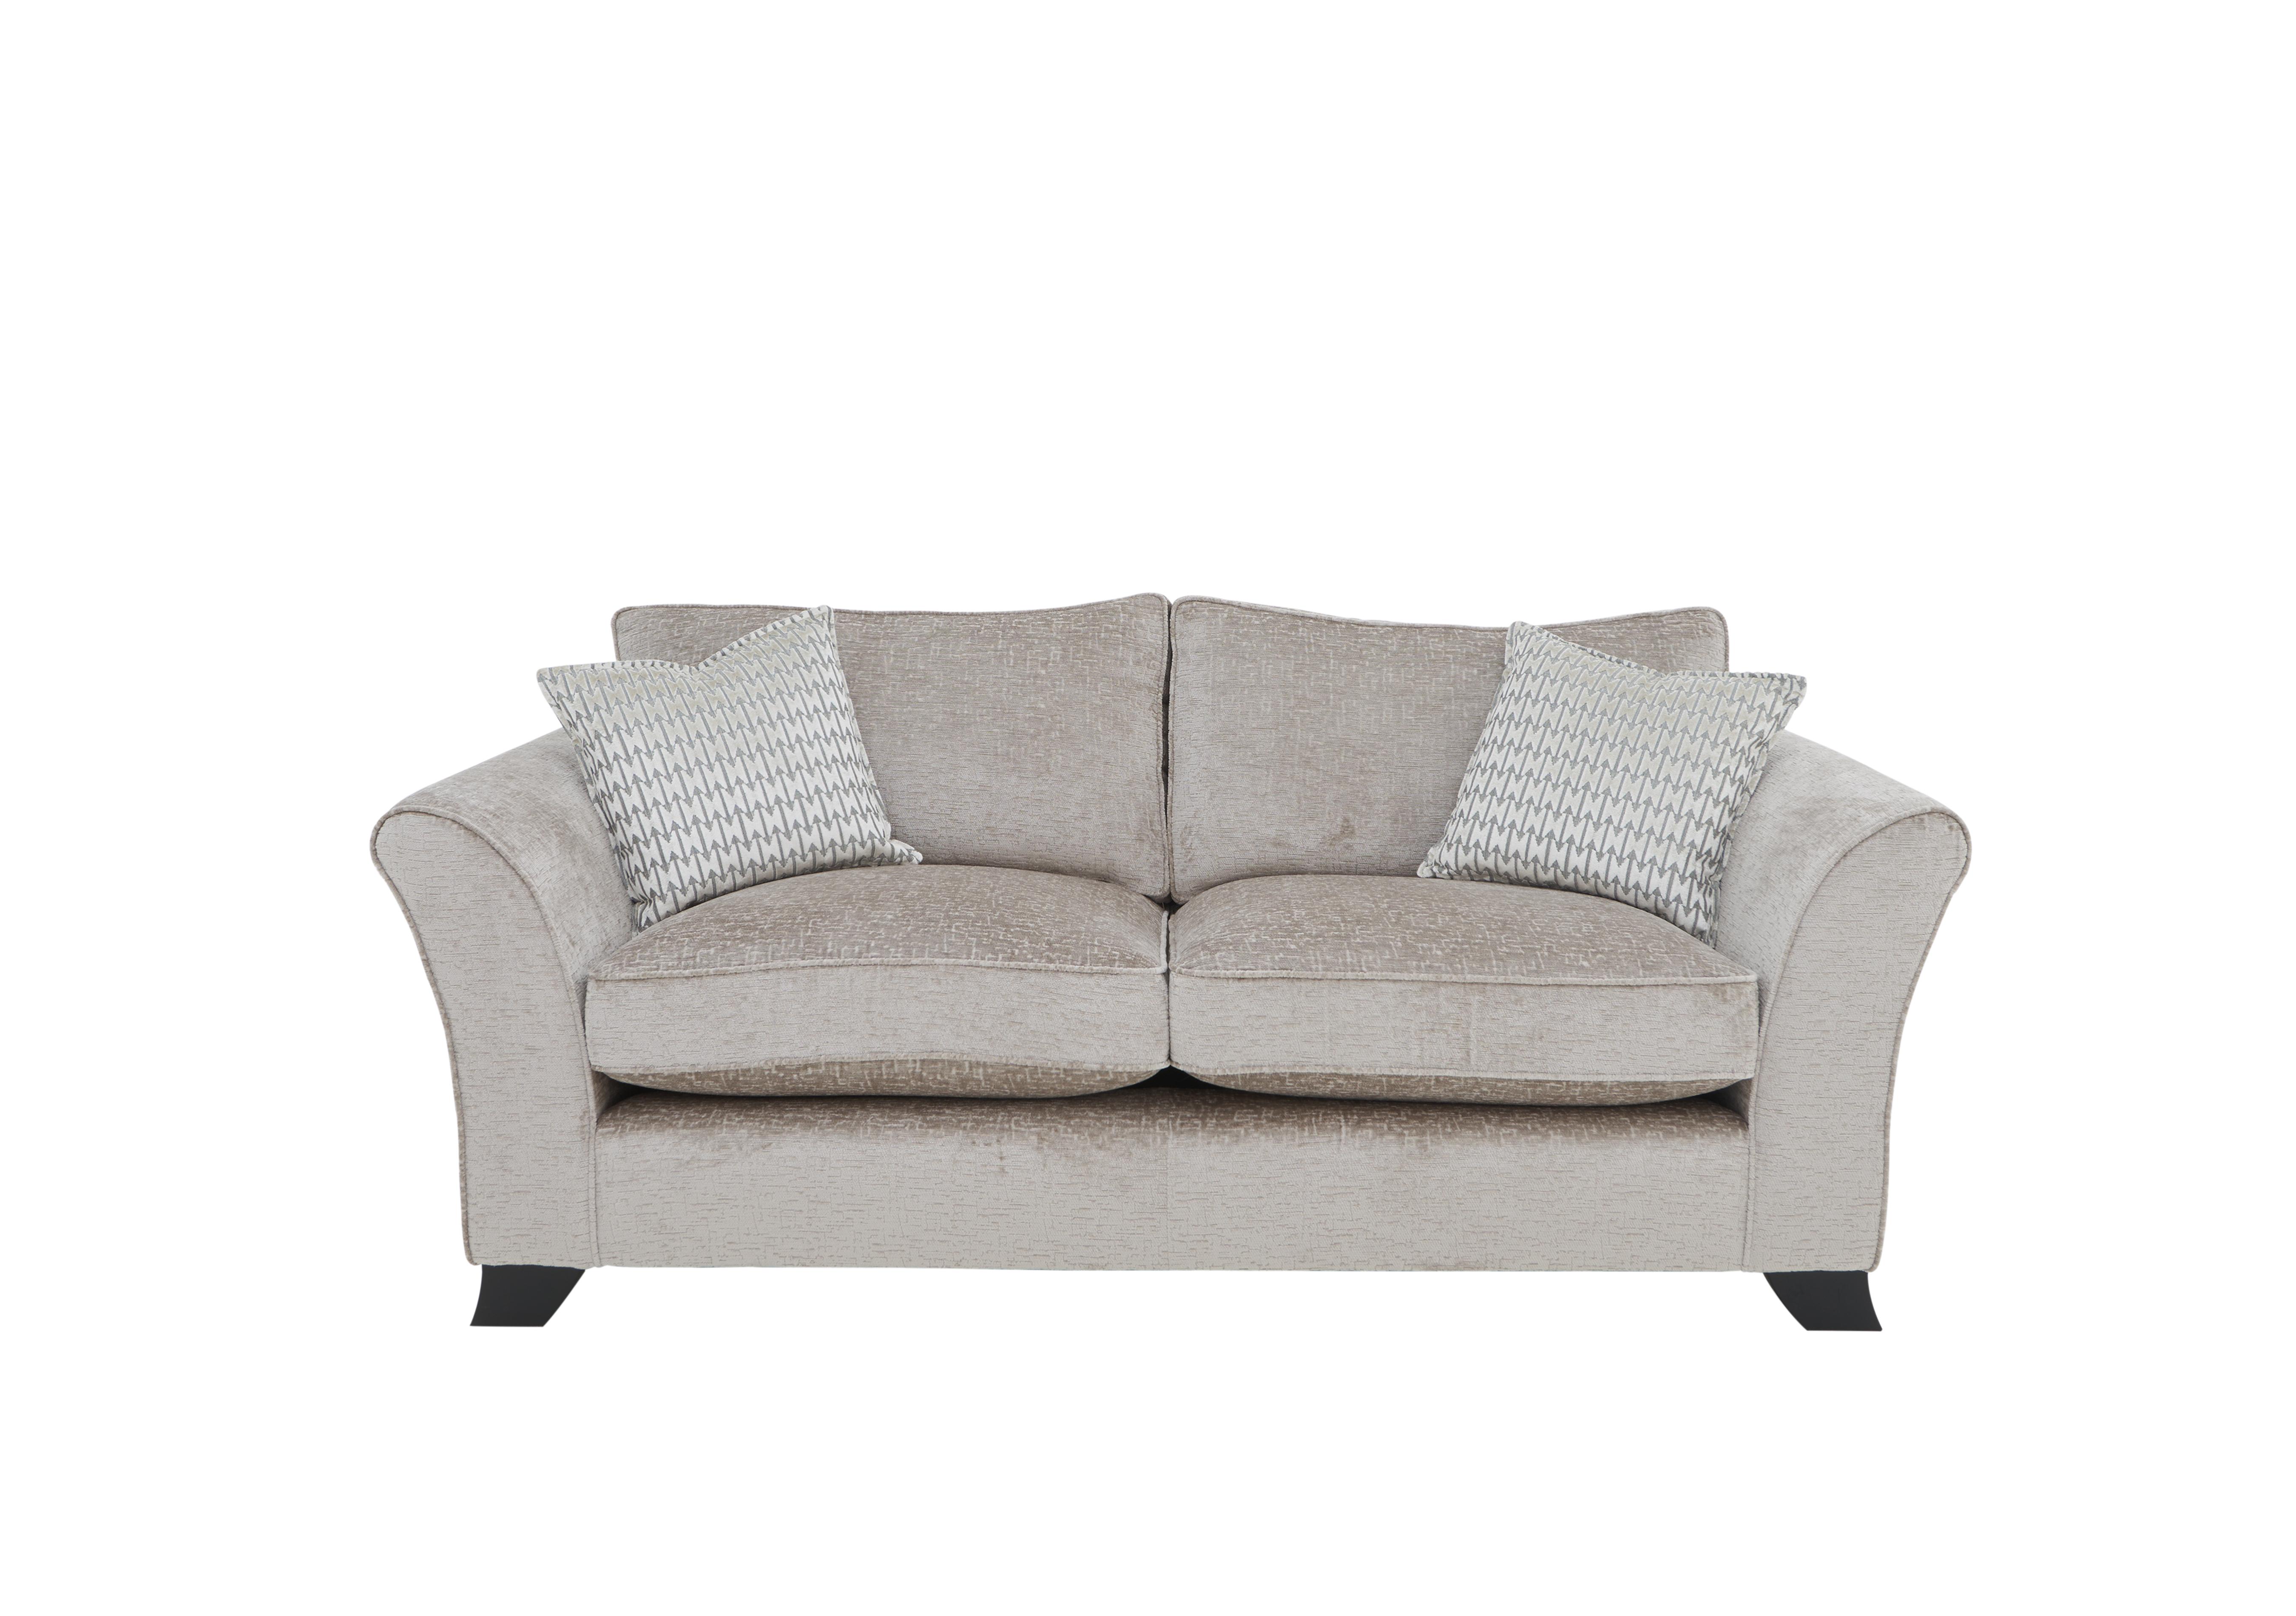 Sasha 3 Seater Classic Back Sofa Bed in Alexandra Truffle on Furniture Village